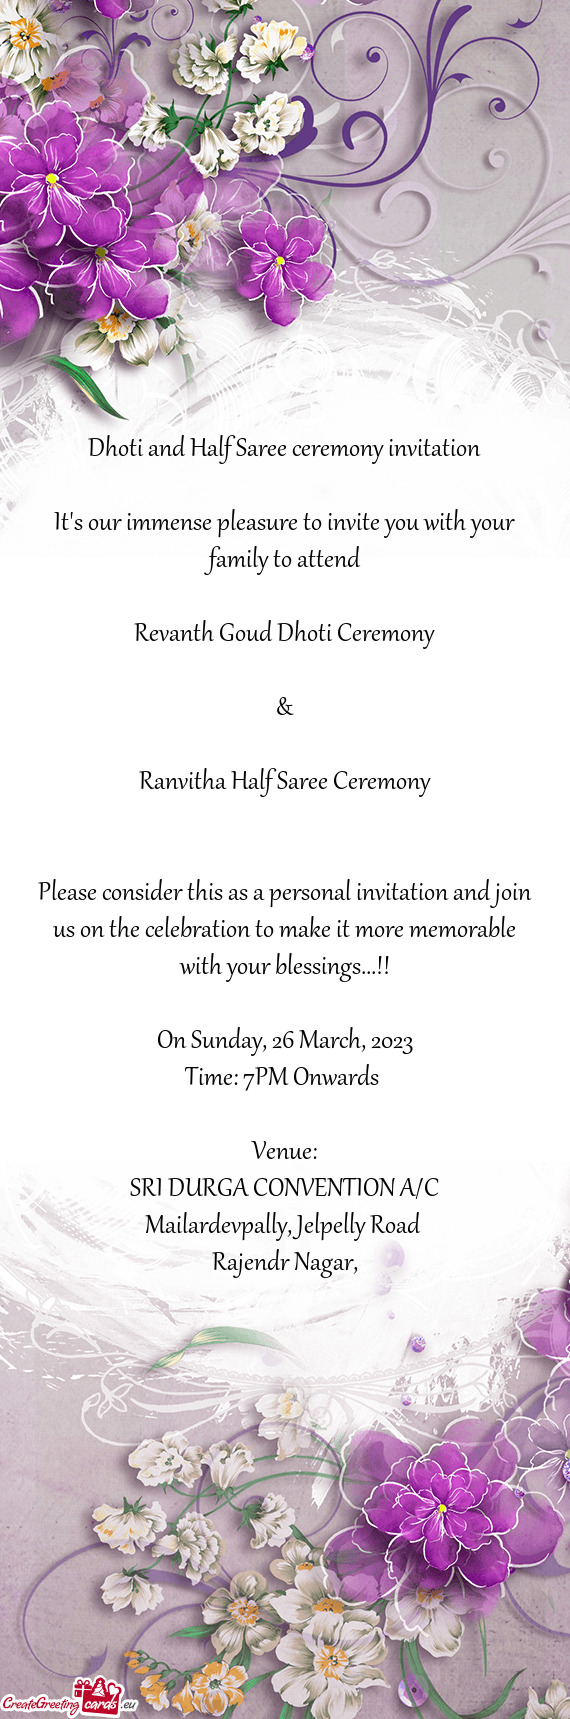 Ranvitha Half Saree Ceremony